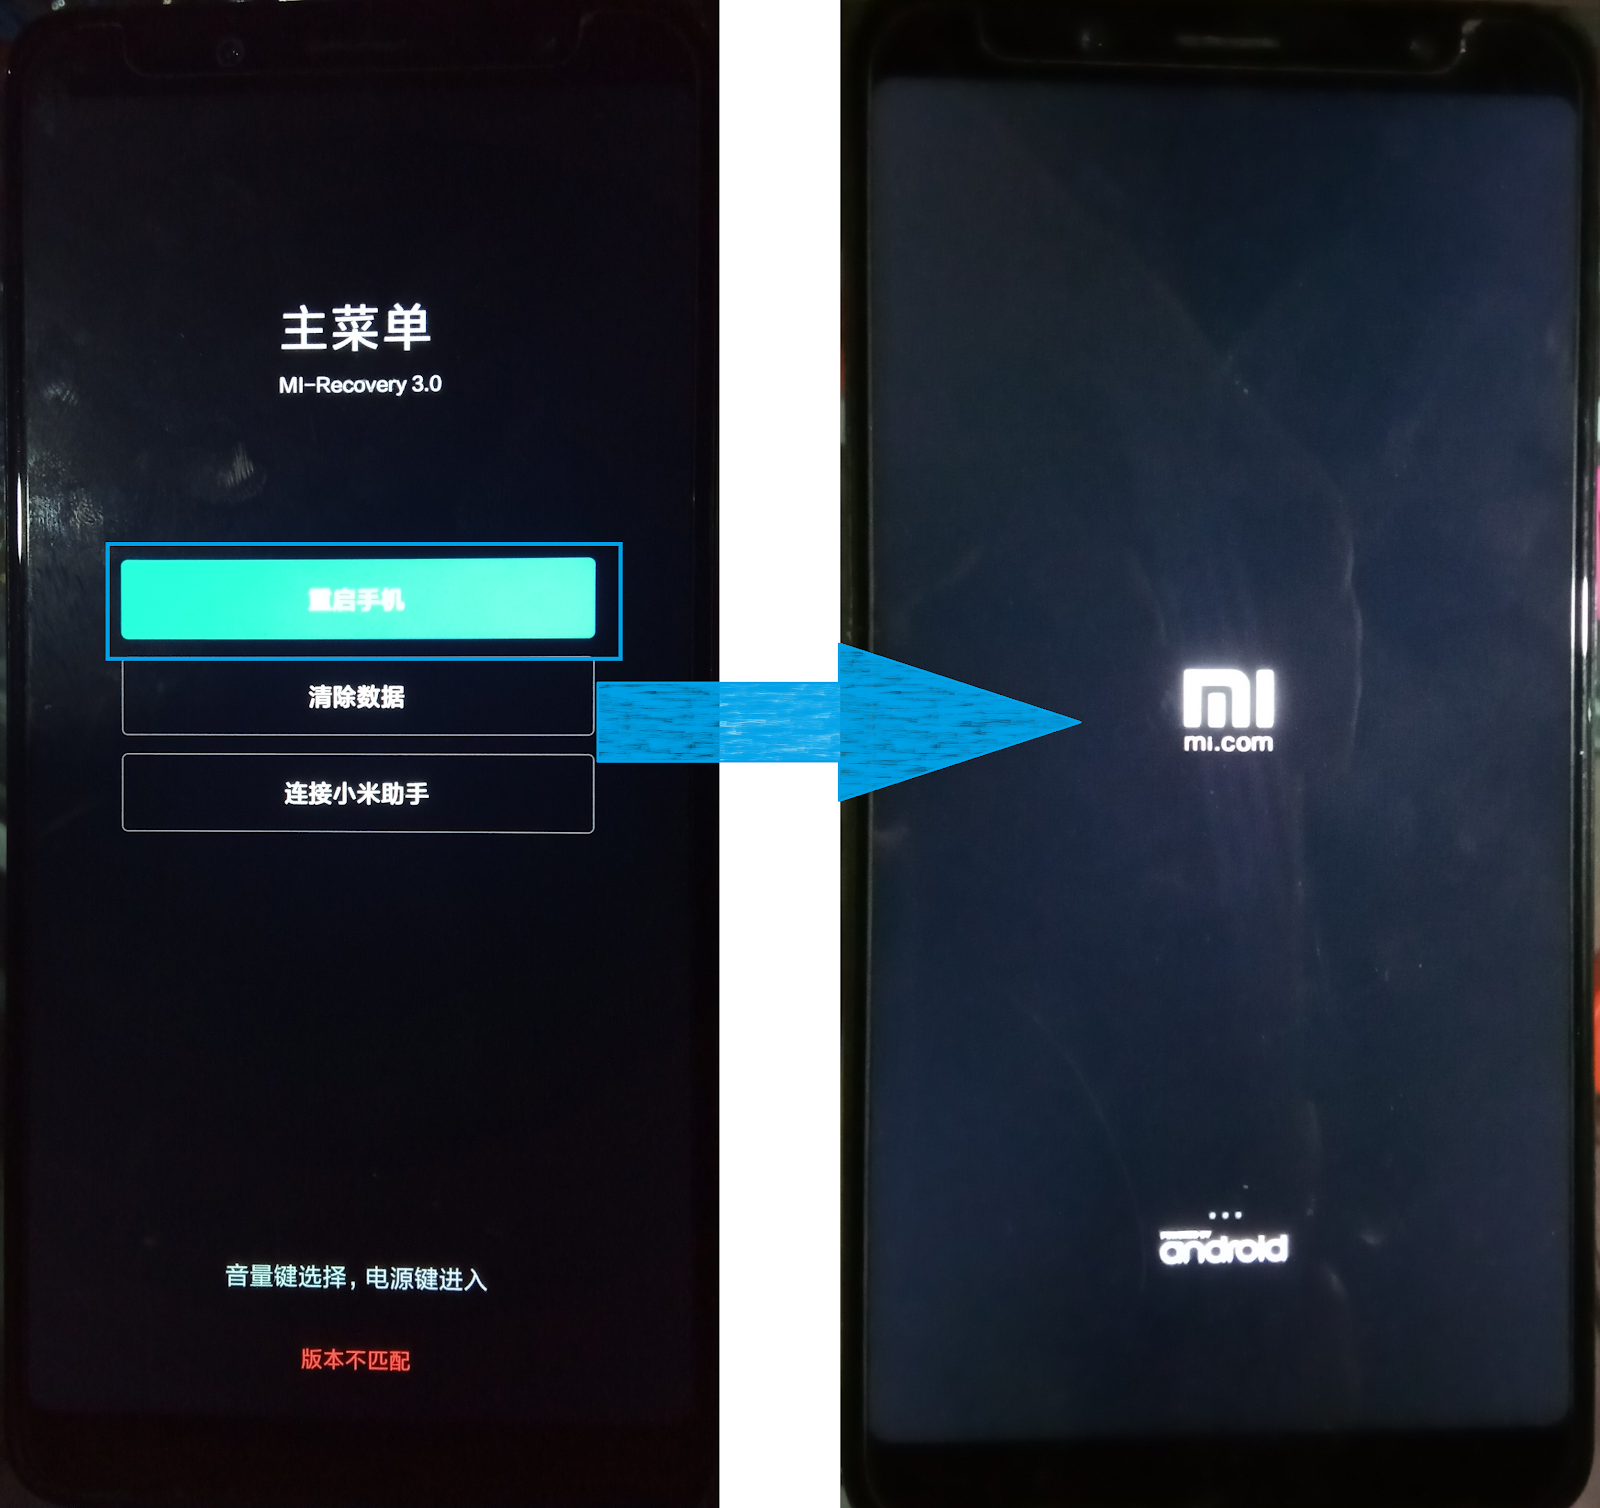 Xiaomi miui recovery 5.0